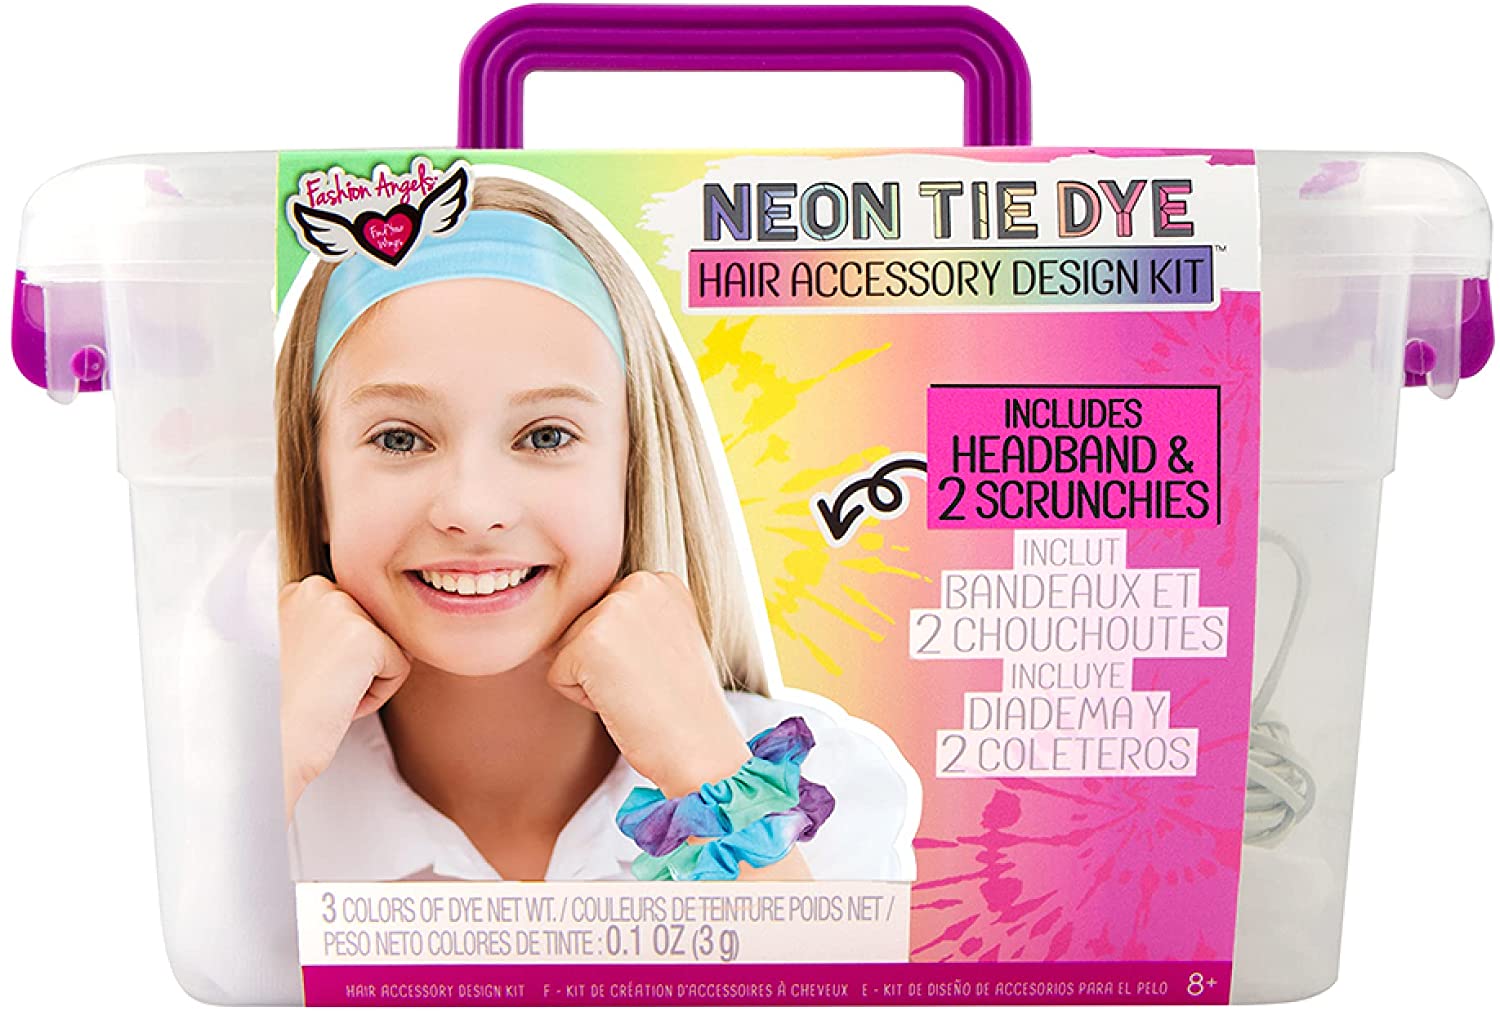 Tie Dye Kit - Neon Tie Dye Hair Accessories Kit - Scrunchies, Headband, Gloves, Elastic Bands / Storage Bin $5.88 + Free Ship w/Prime